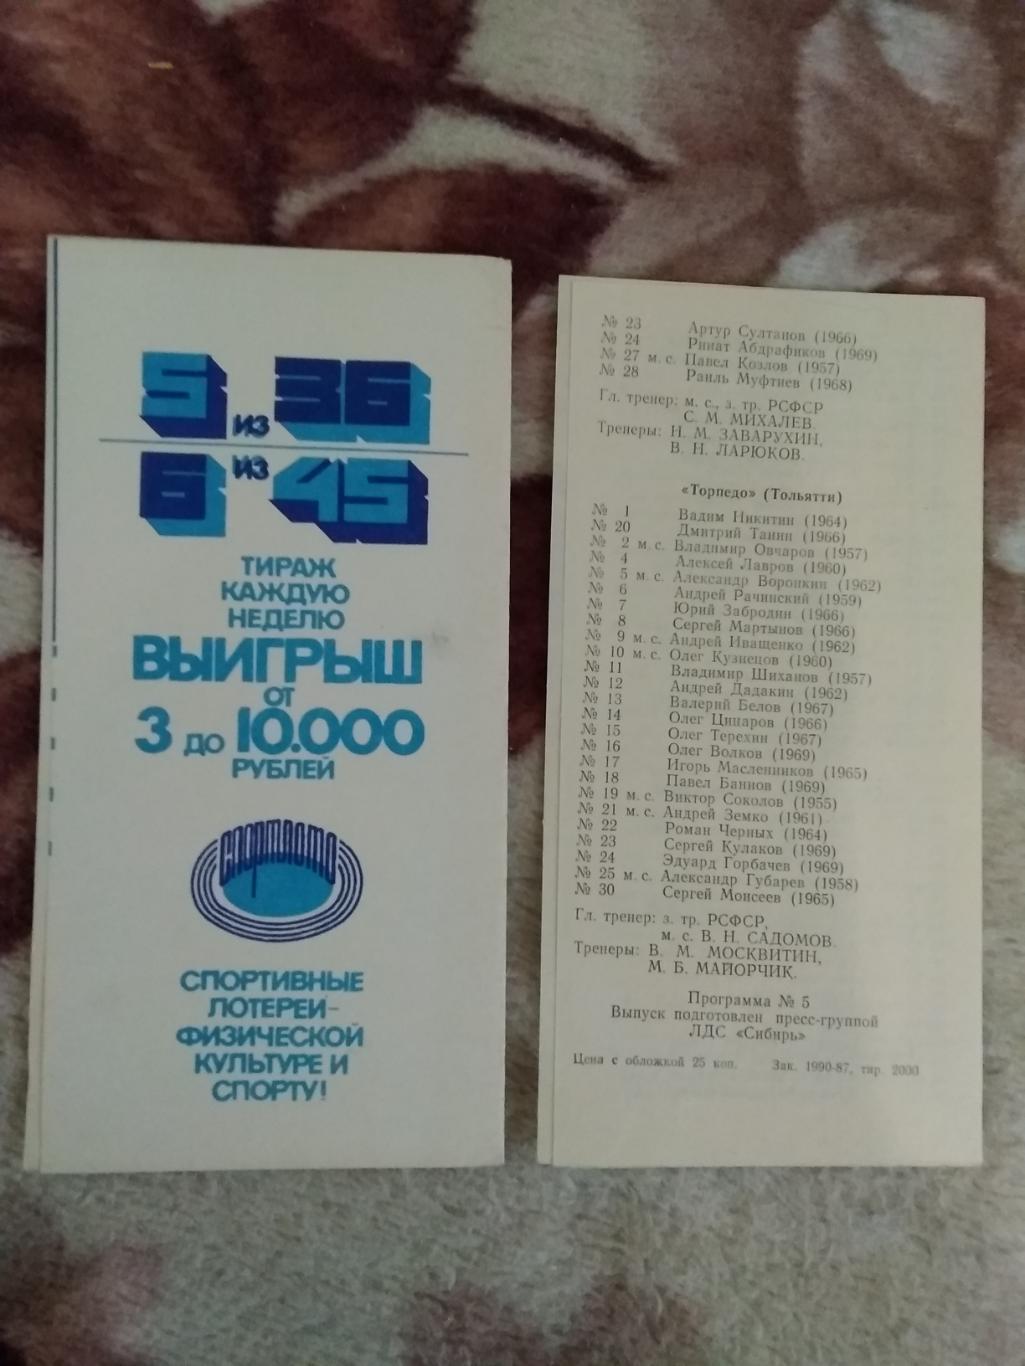 Сибирь (Новосибирск) - Салават Юлаев (Уфа),Торпедо (Тольятти) 10-15.12.1987. 1